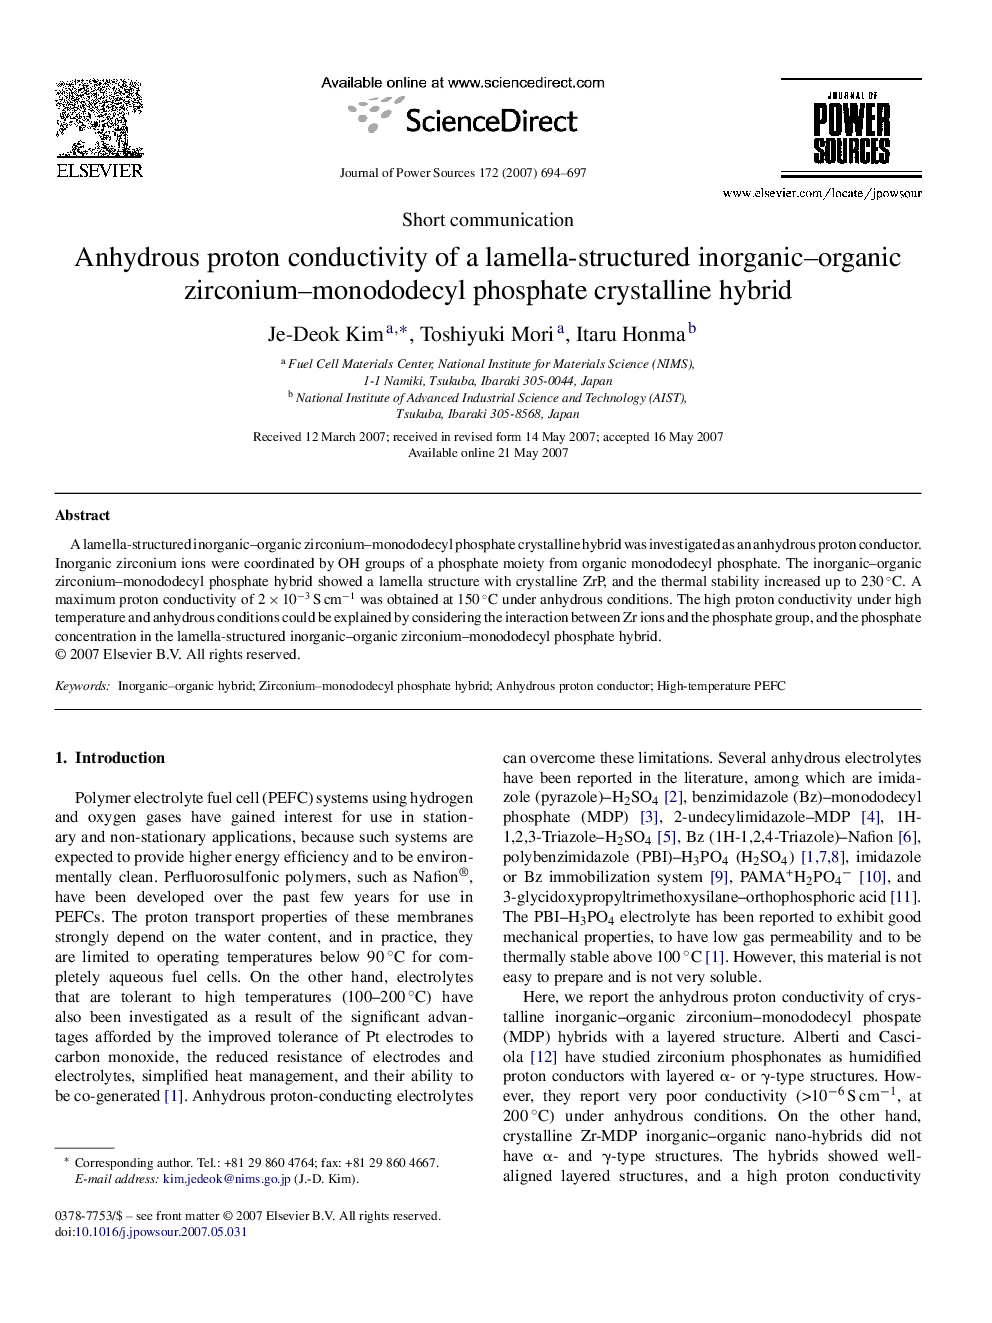 Anhydrous proton conductivity of a lamella-structured inorganic–organic zirconium–monododecyl phosphate crystalline hybrid